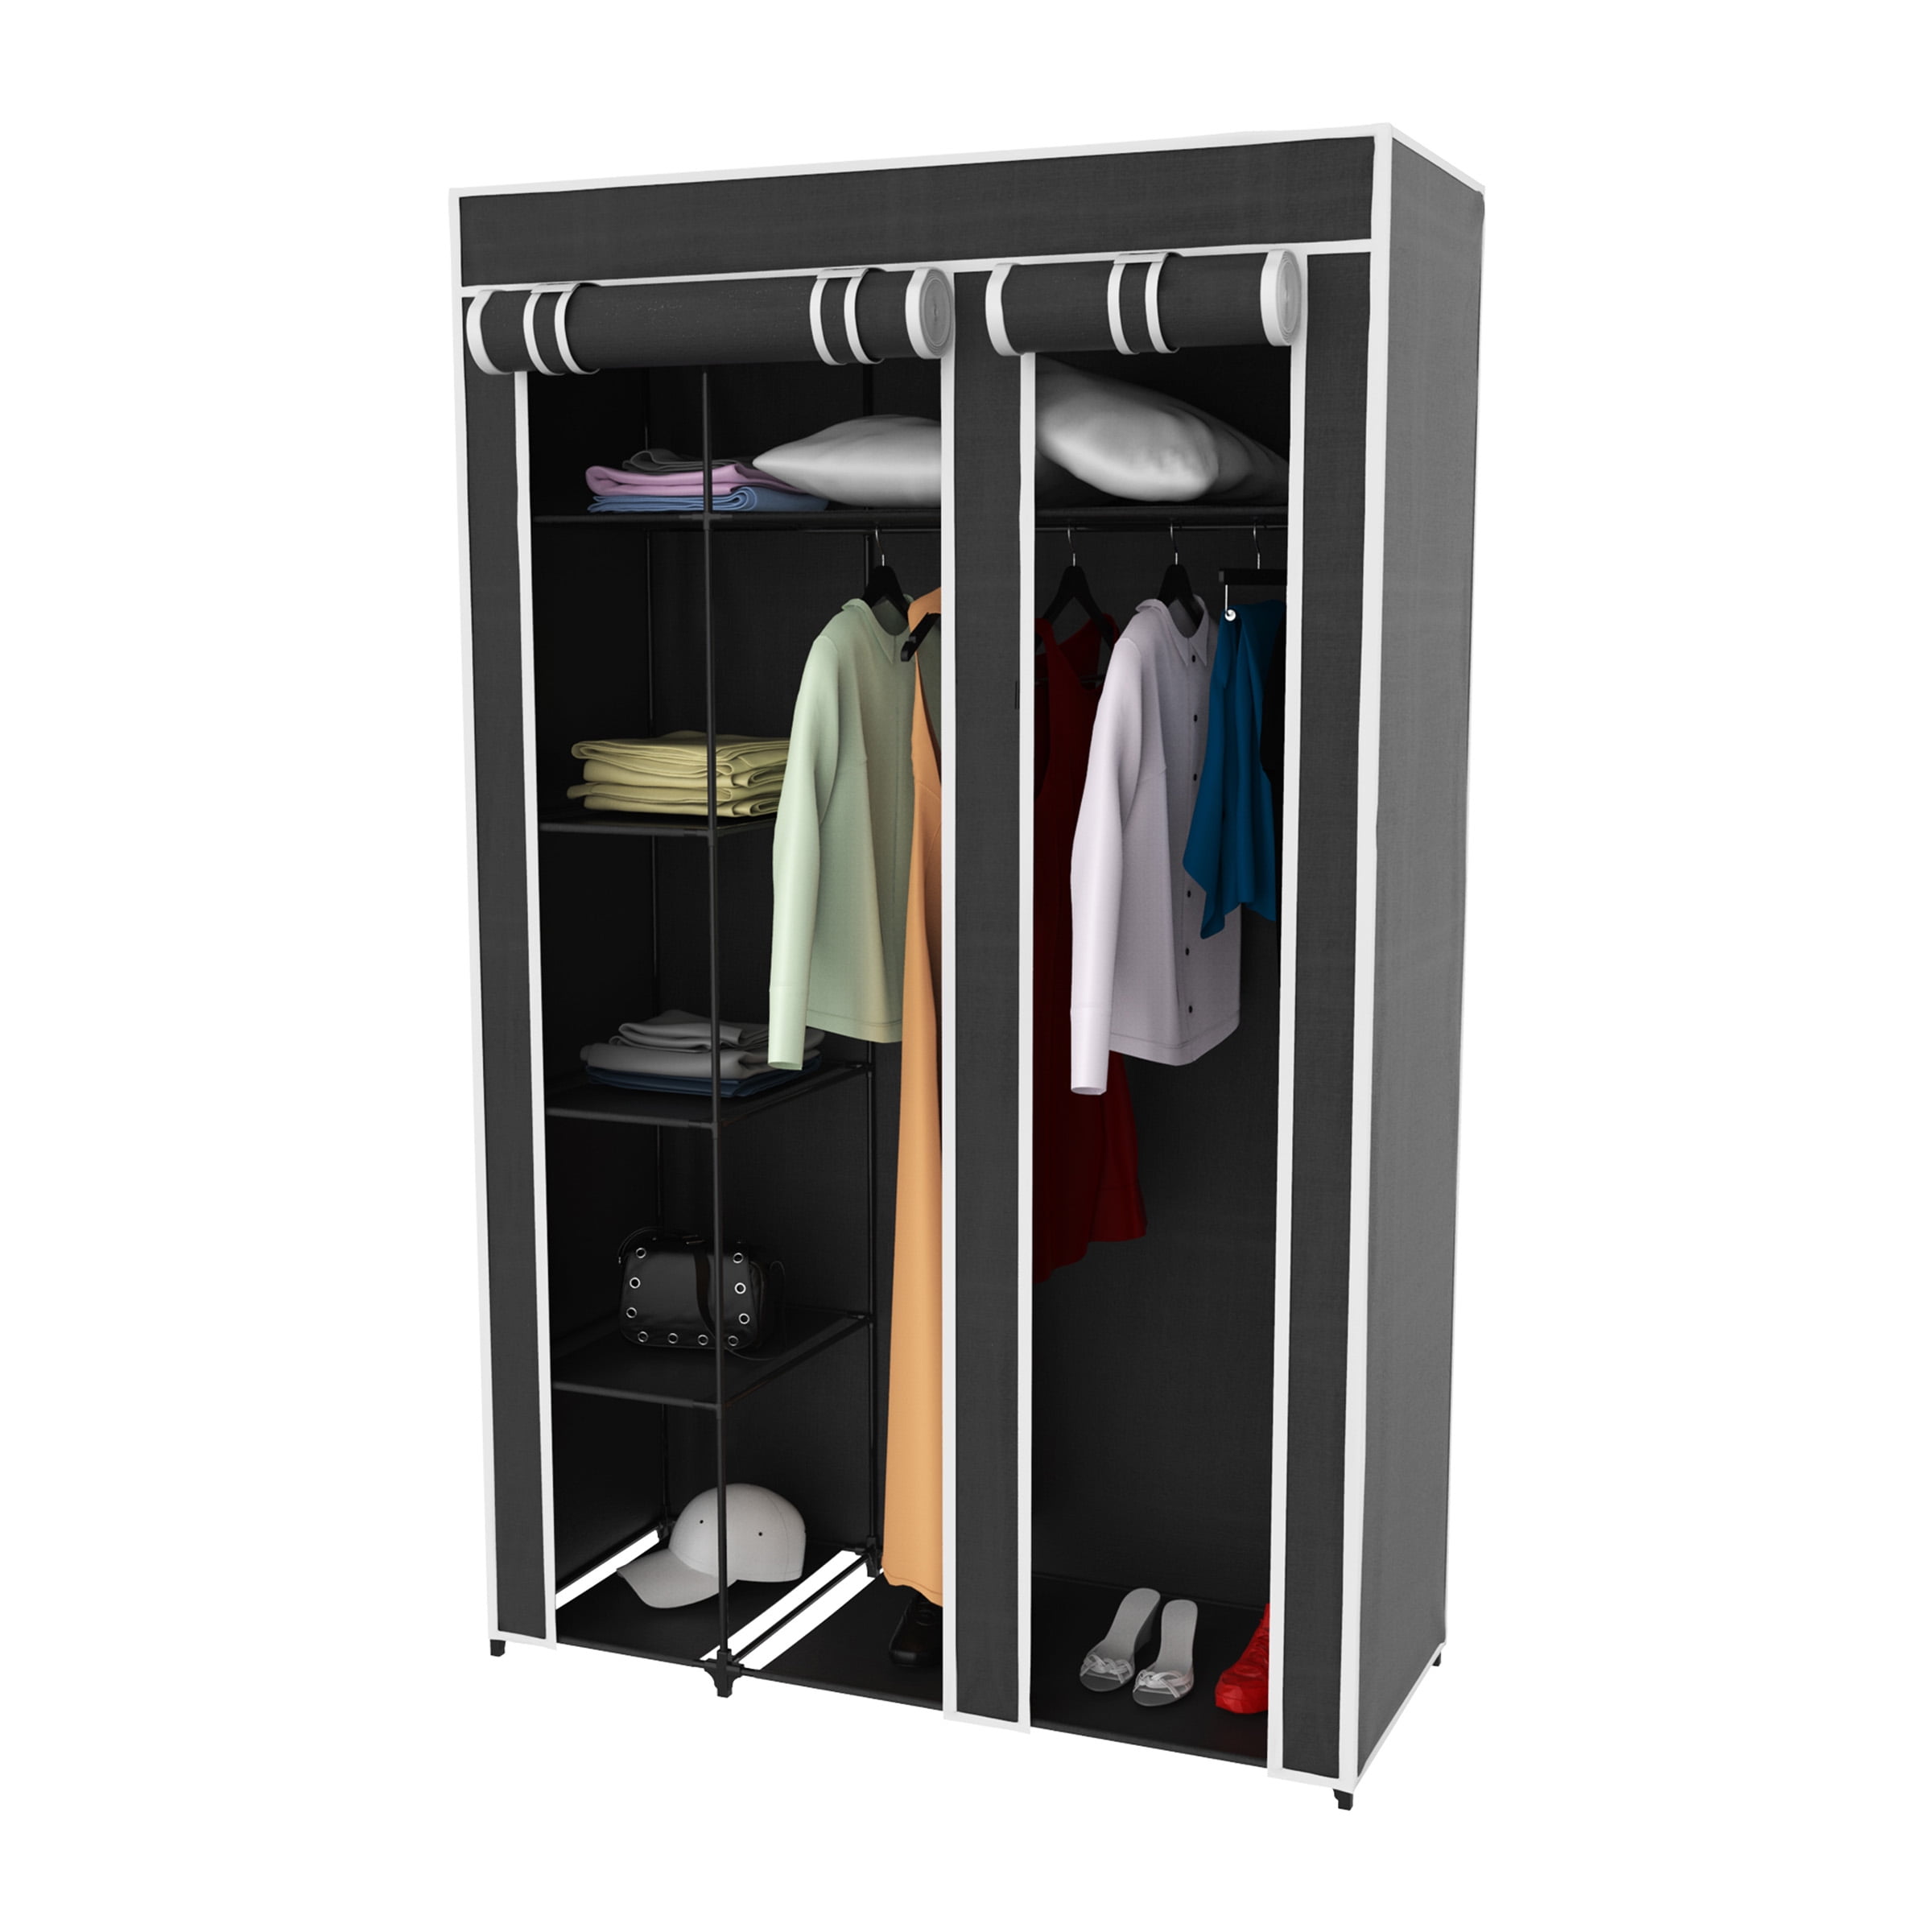 WEKITY Freestanding Closet Organizer,Portable Closet,Wardrobe